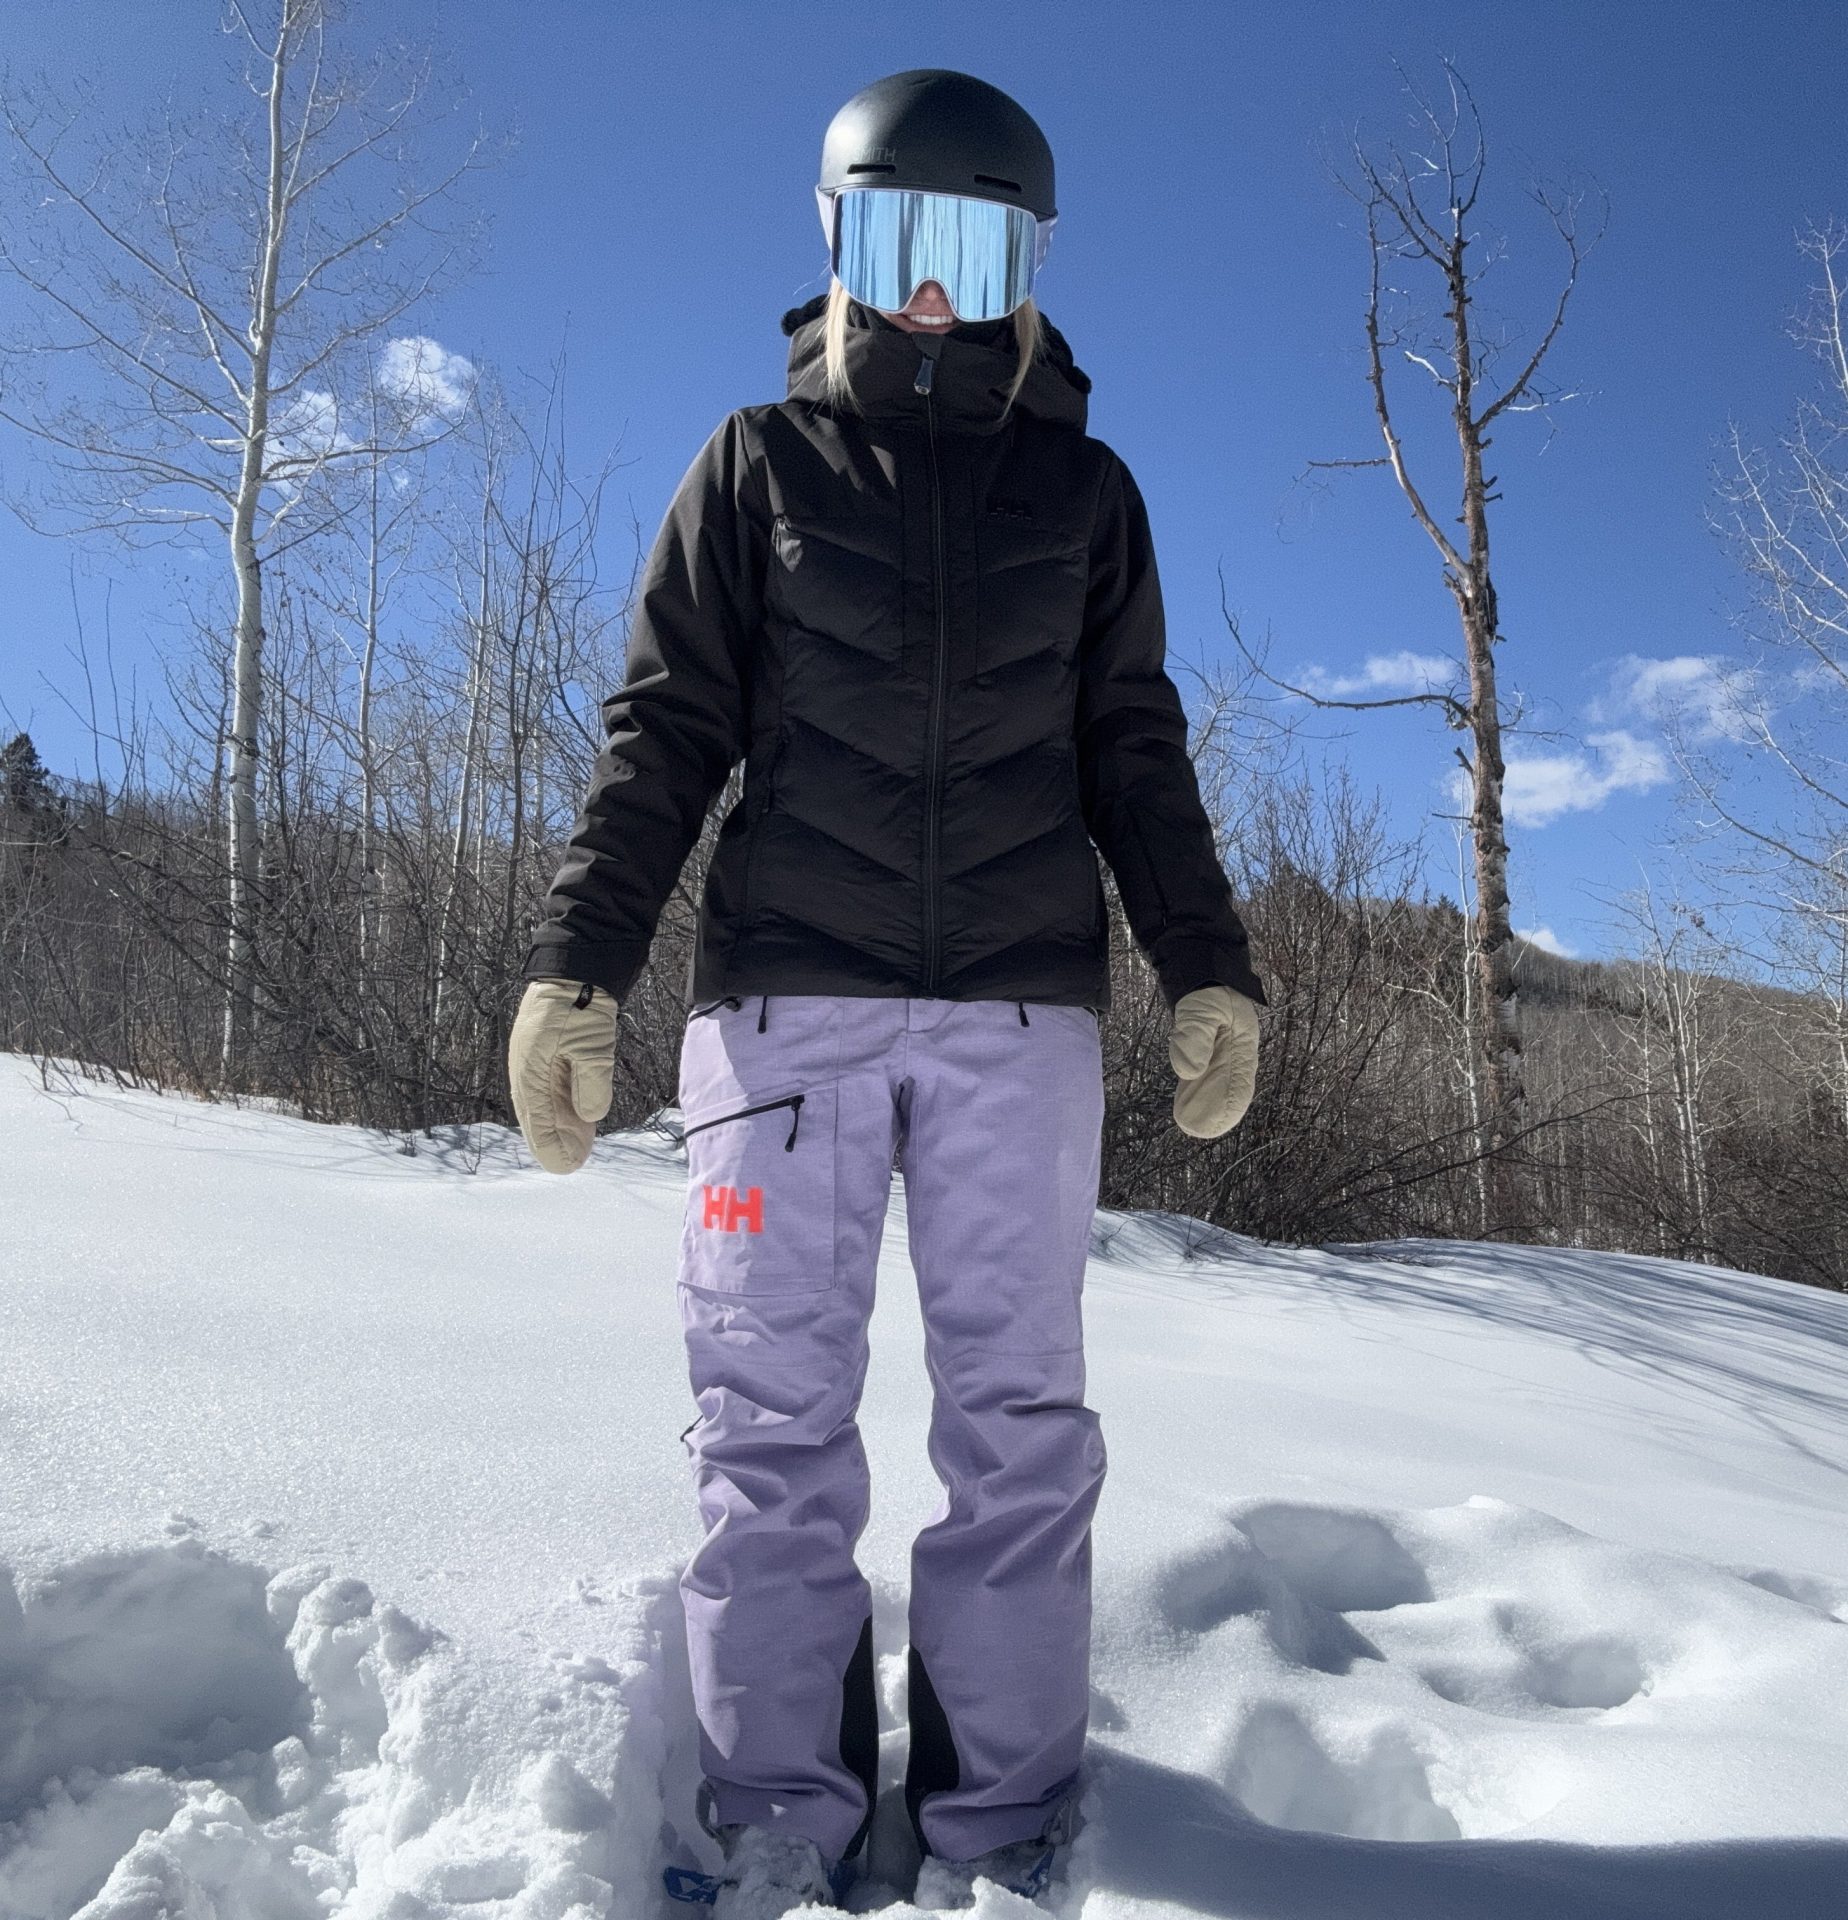 Functional, Feminine Lululemon Gear for Skiers - Powder